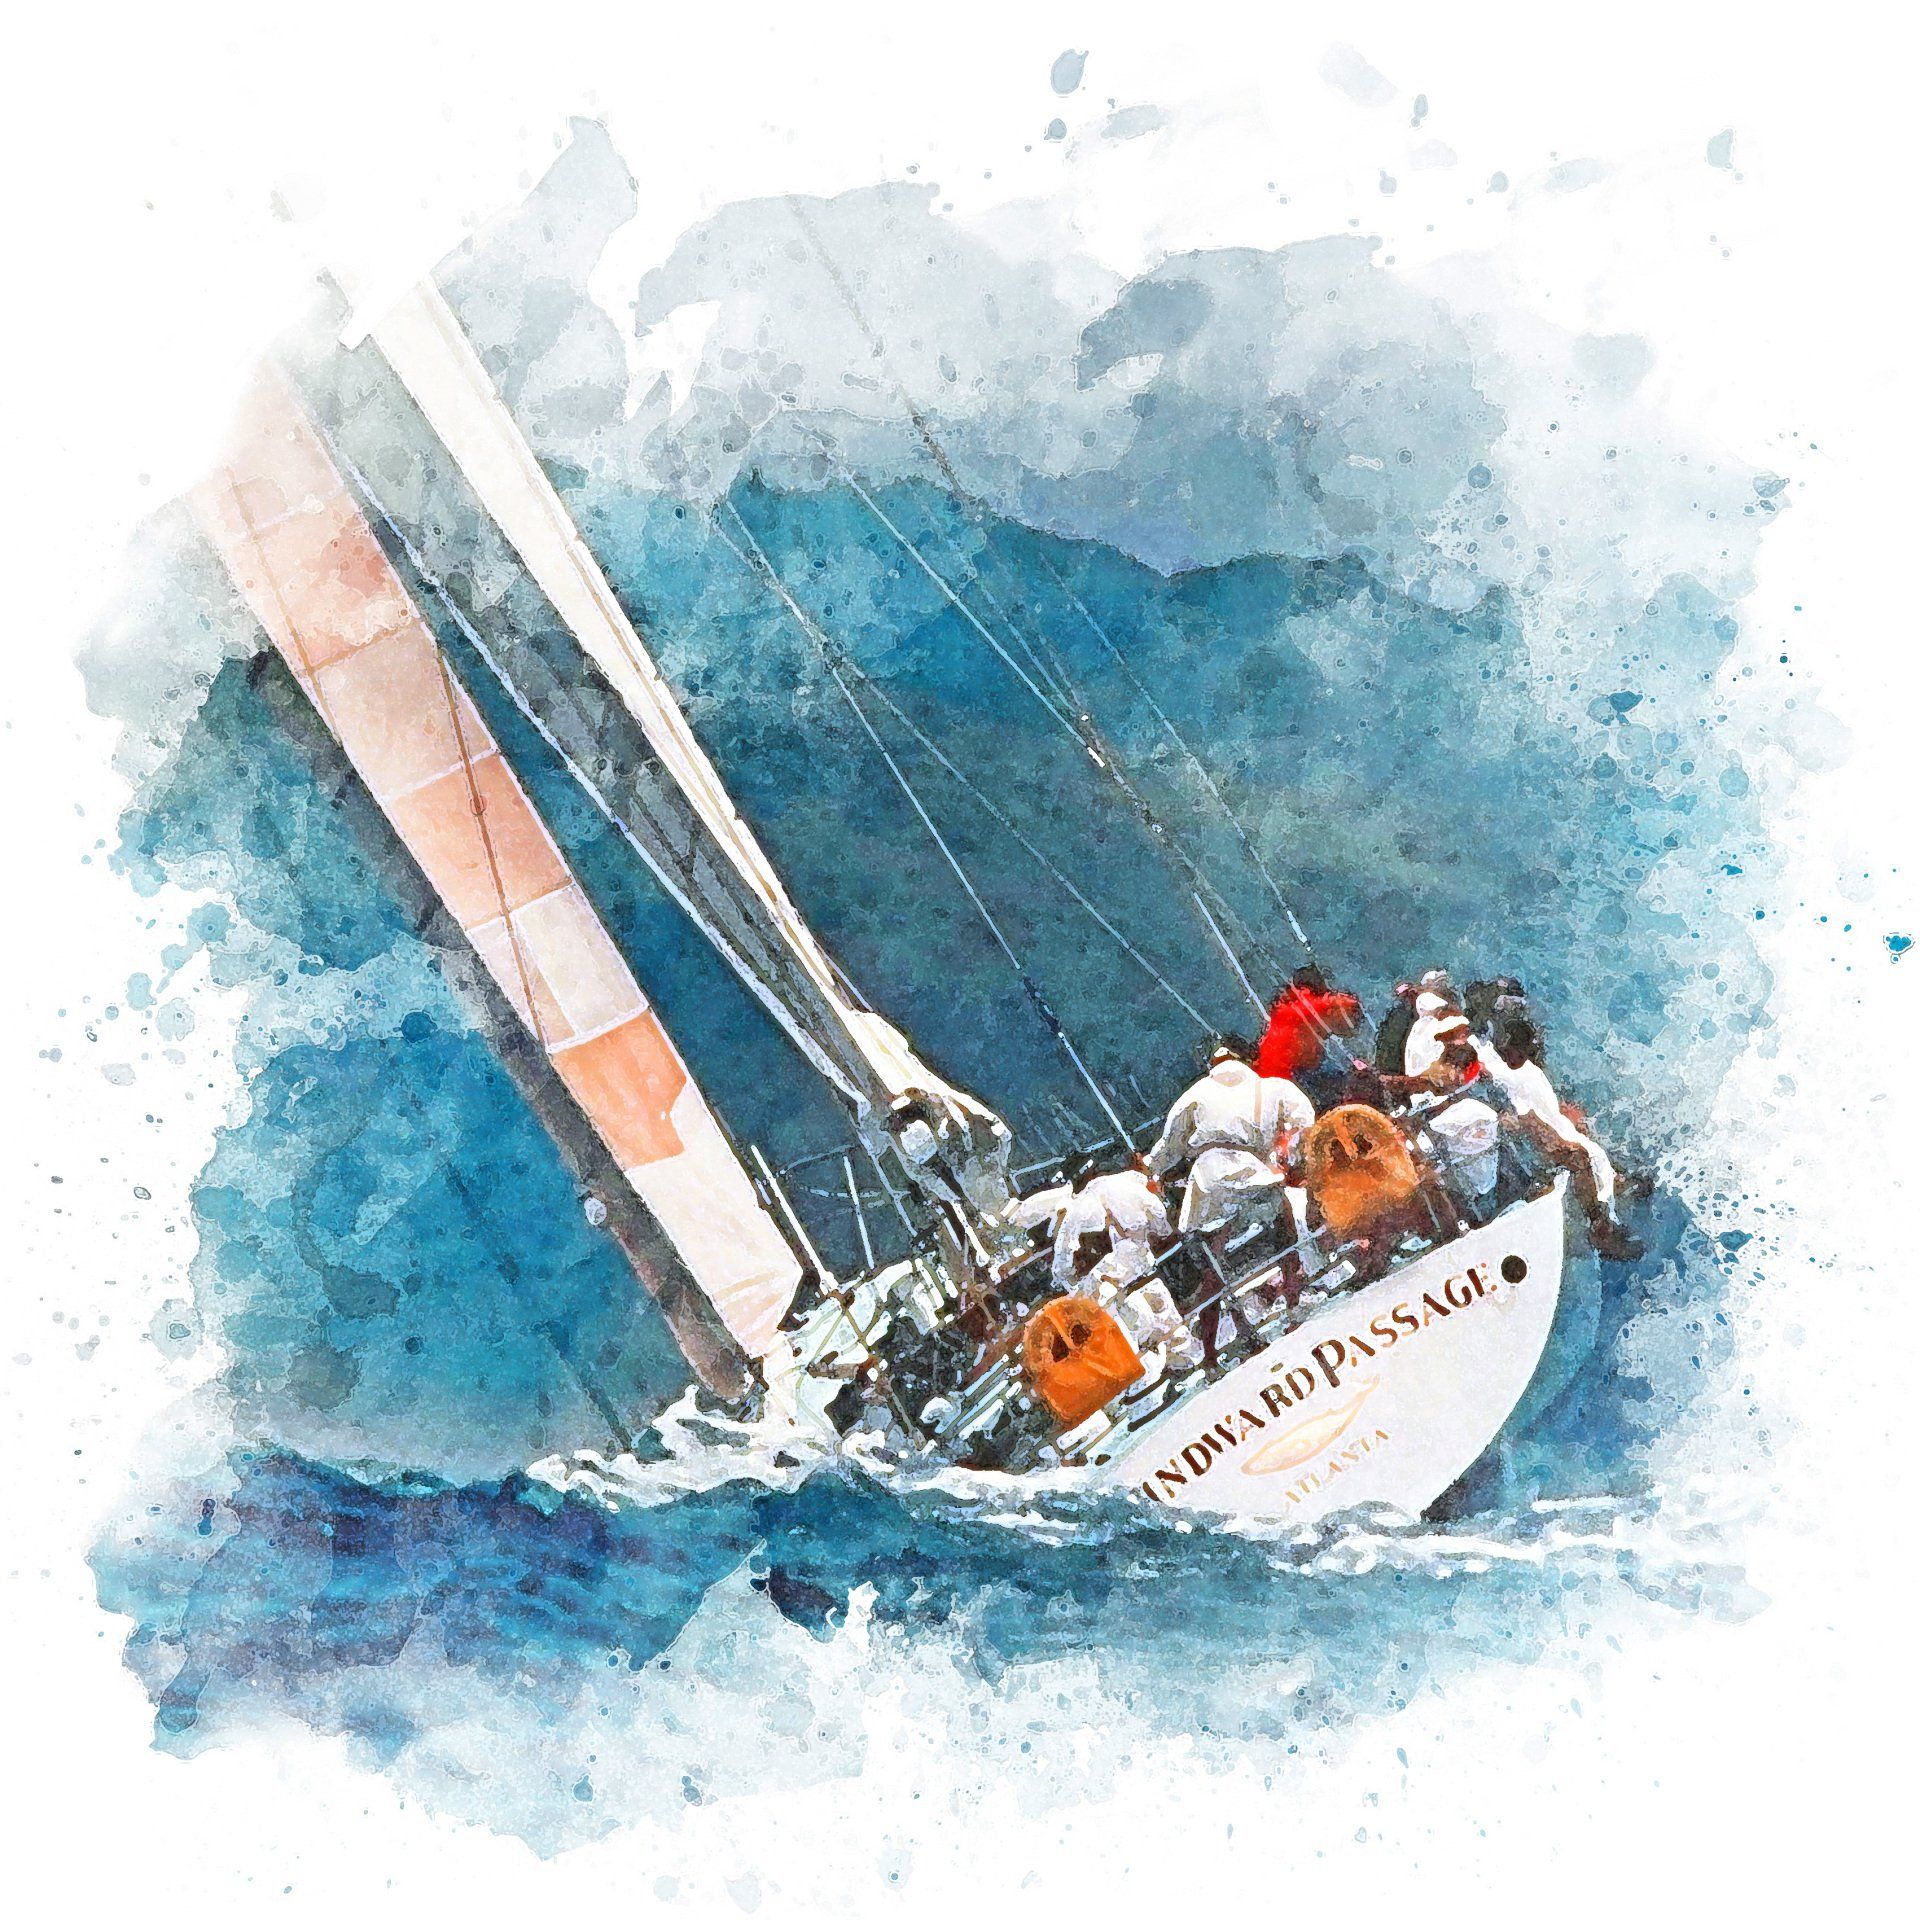 watercolor image of a sailboat